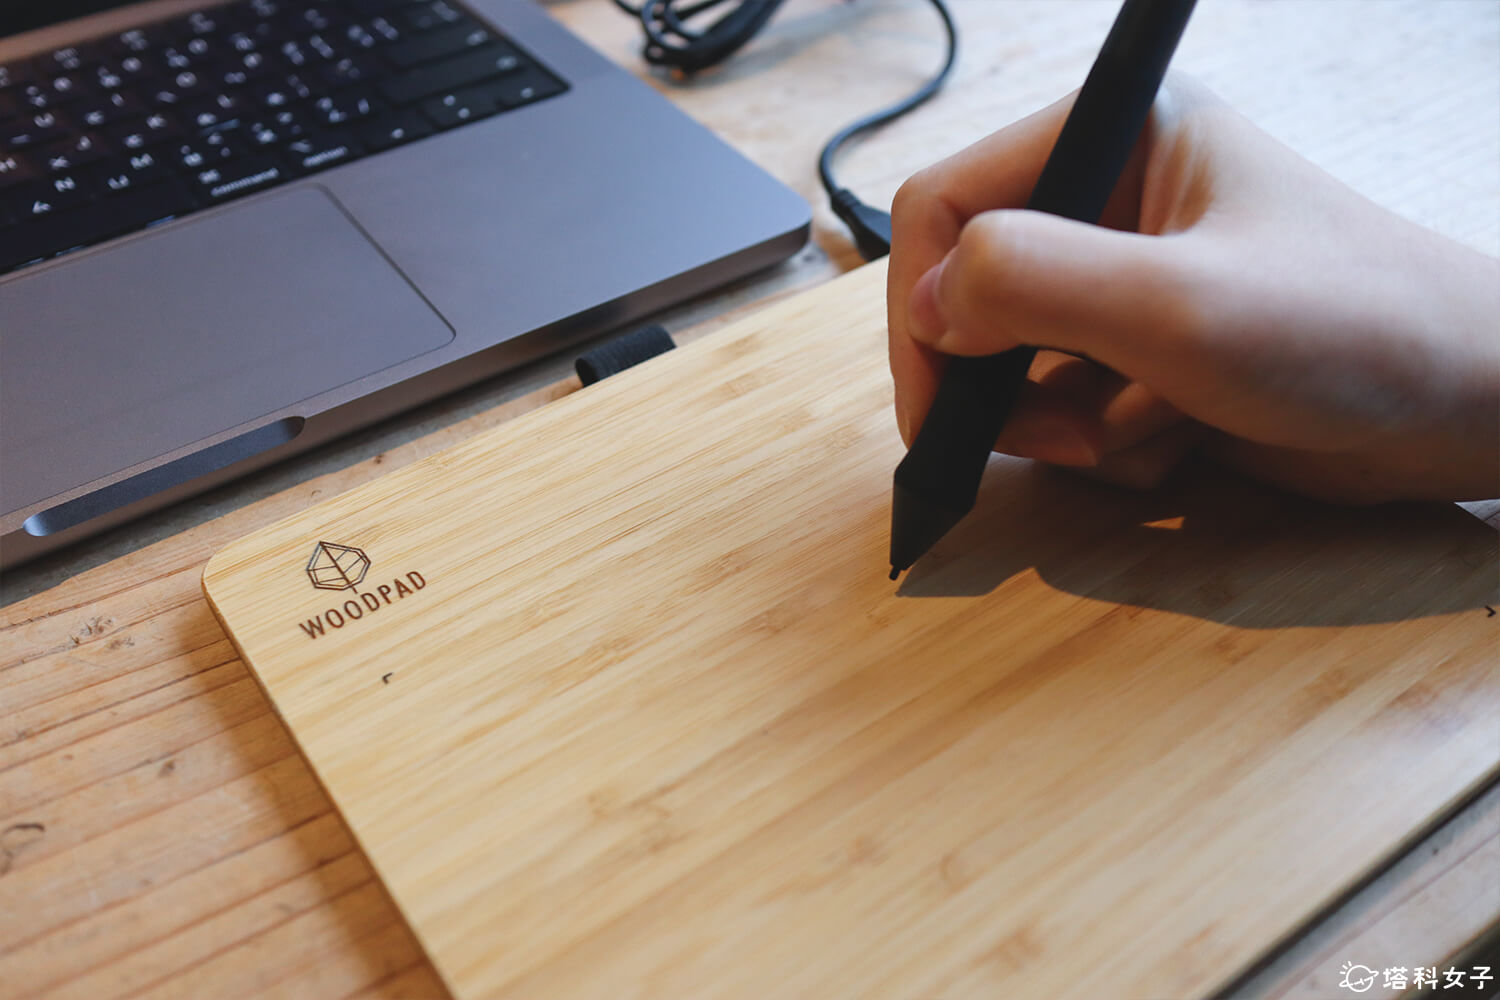 ViewBoard Notepad 數位手寫板：無電池繪圖筆直接書寫在手寫板上